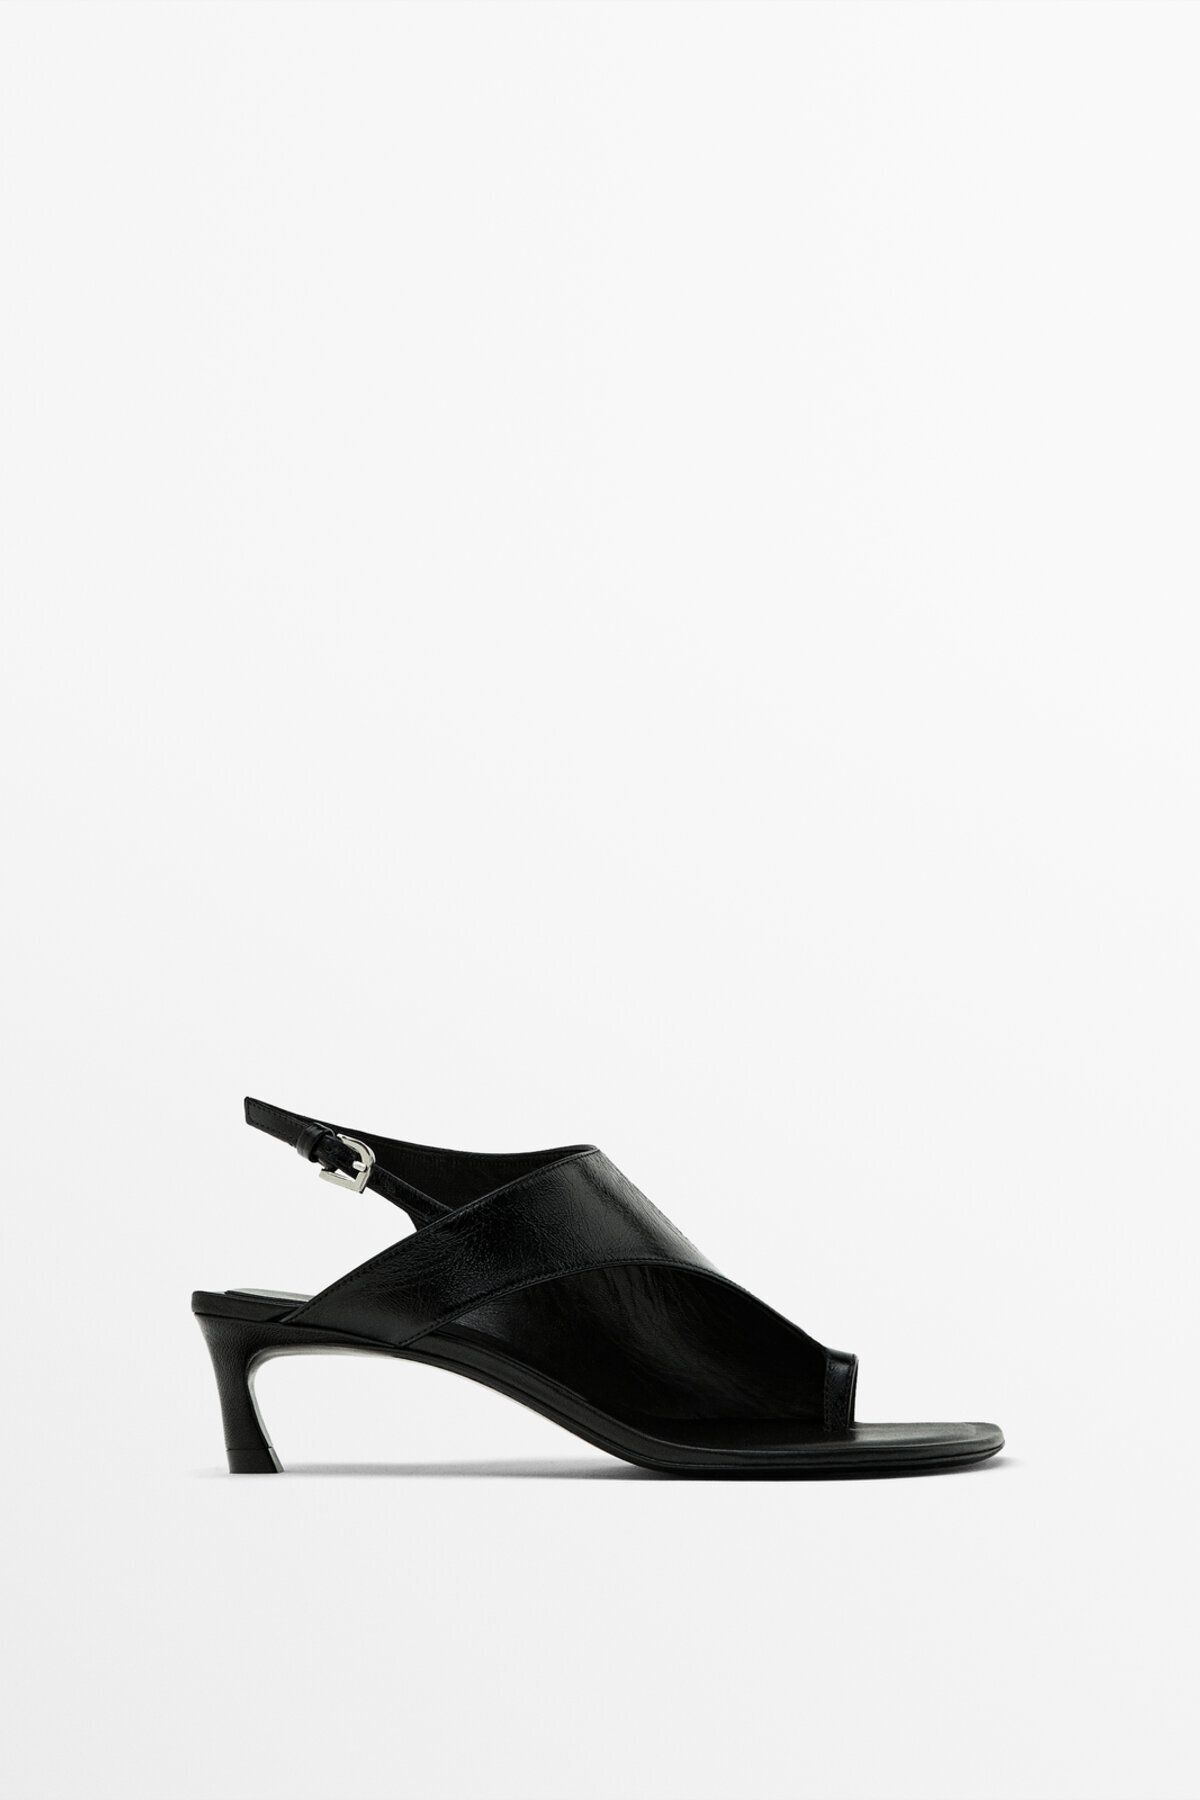 Massimo Dutti Limited Edition - Asimetrik üst tasarımlı topuklu sandalet